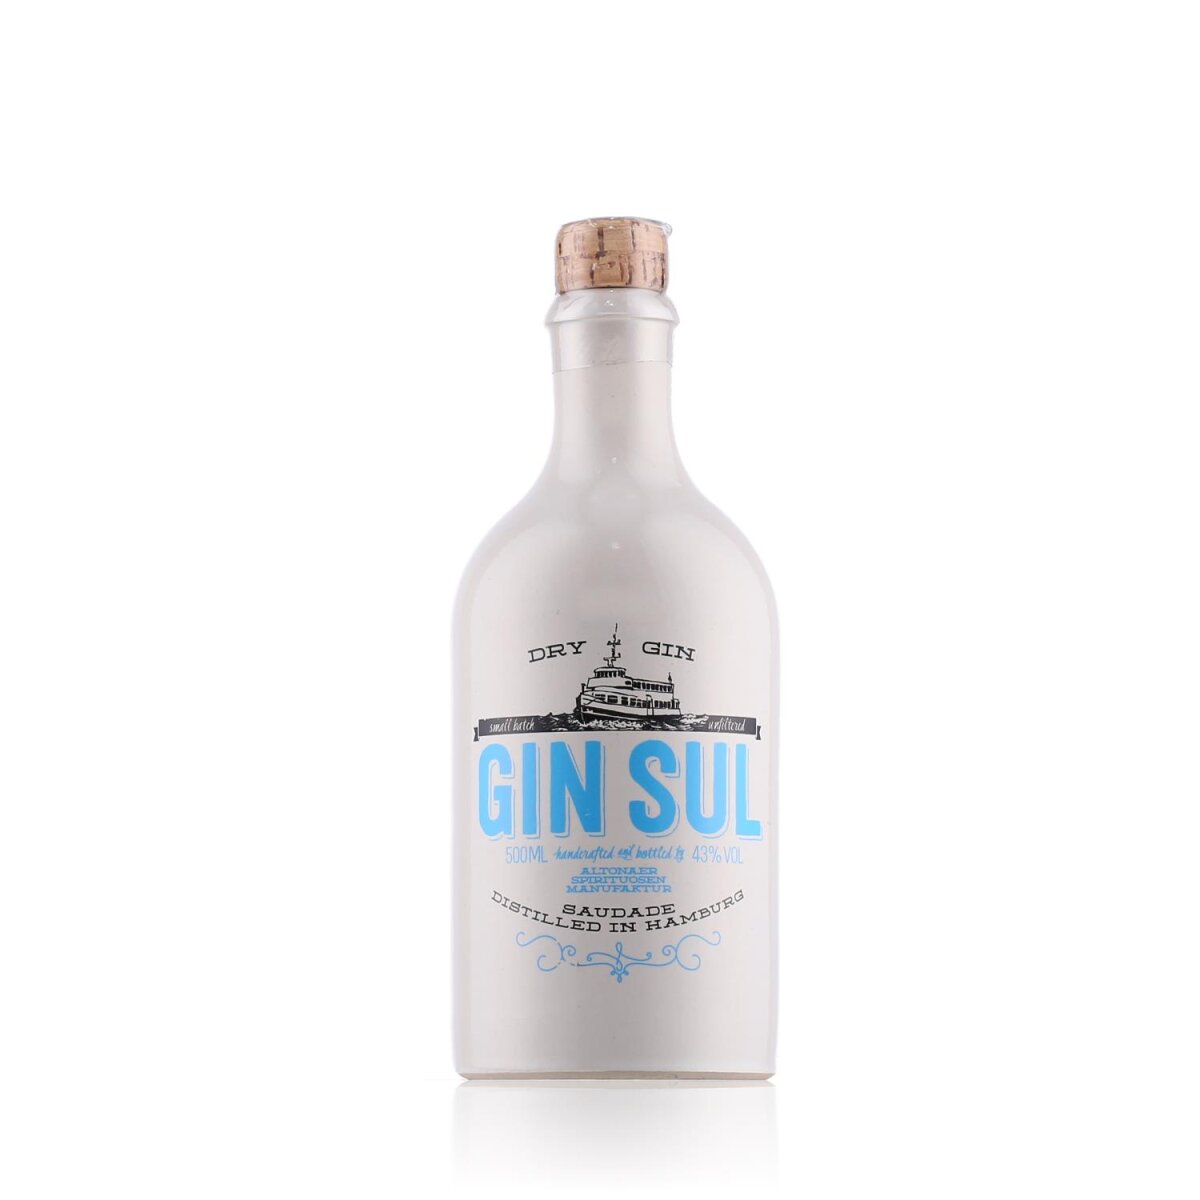 Gin Sul Dry Vol. 43% Gin 23,39 € 0,5l